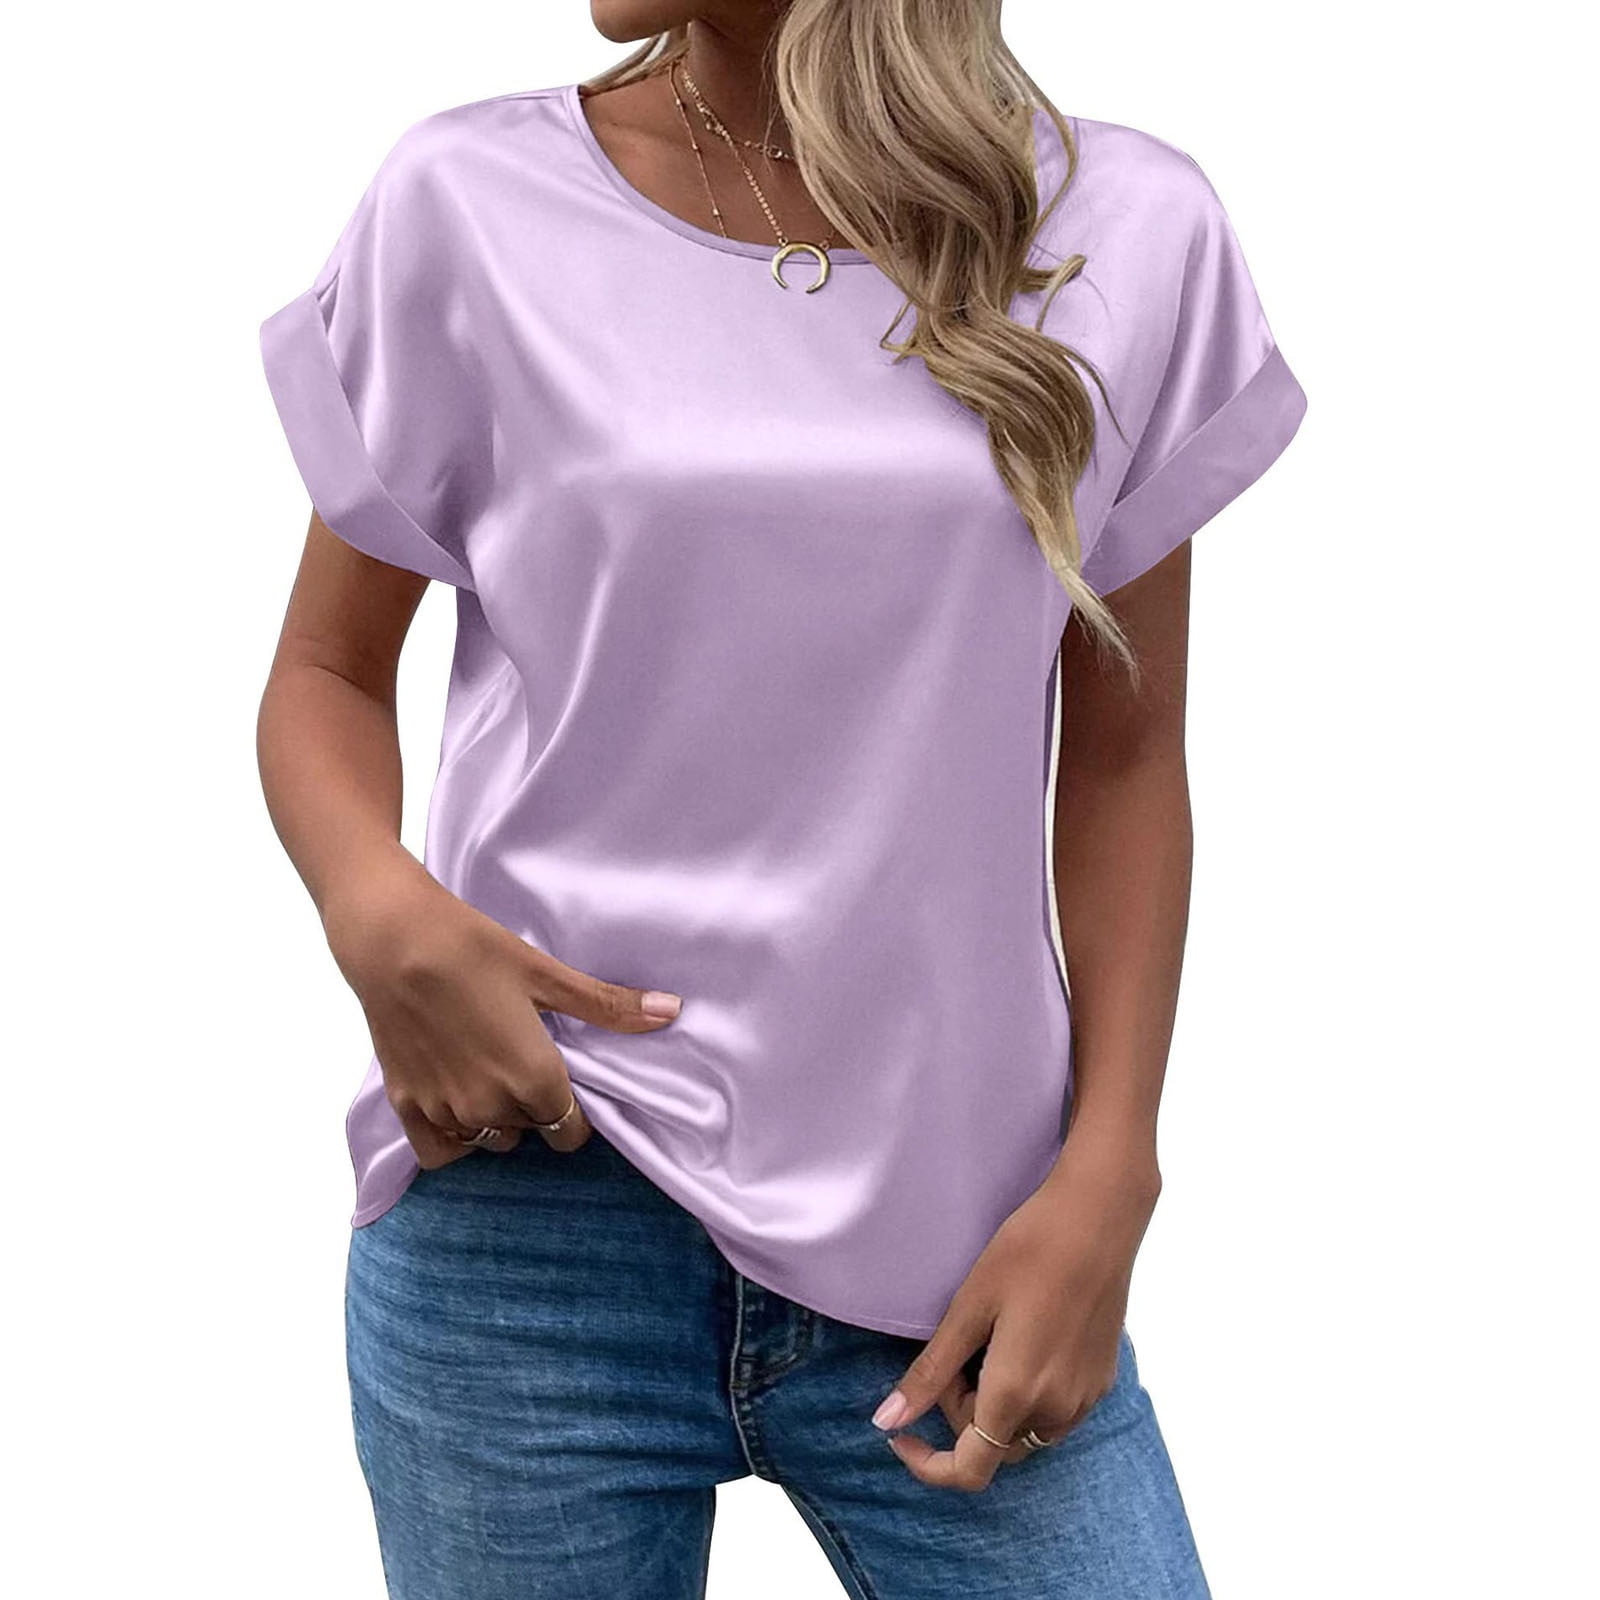 3/4 Length Short Sleeve Women's Shirts